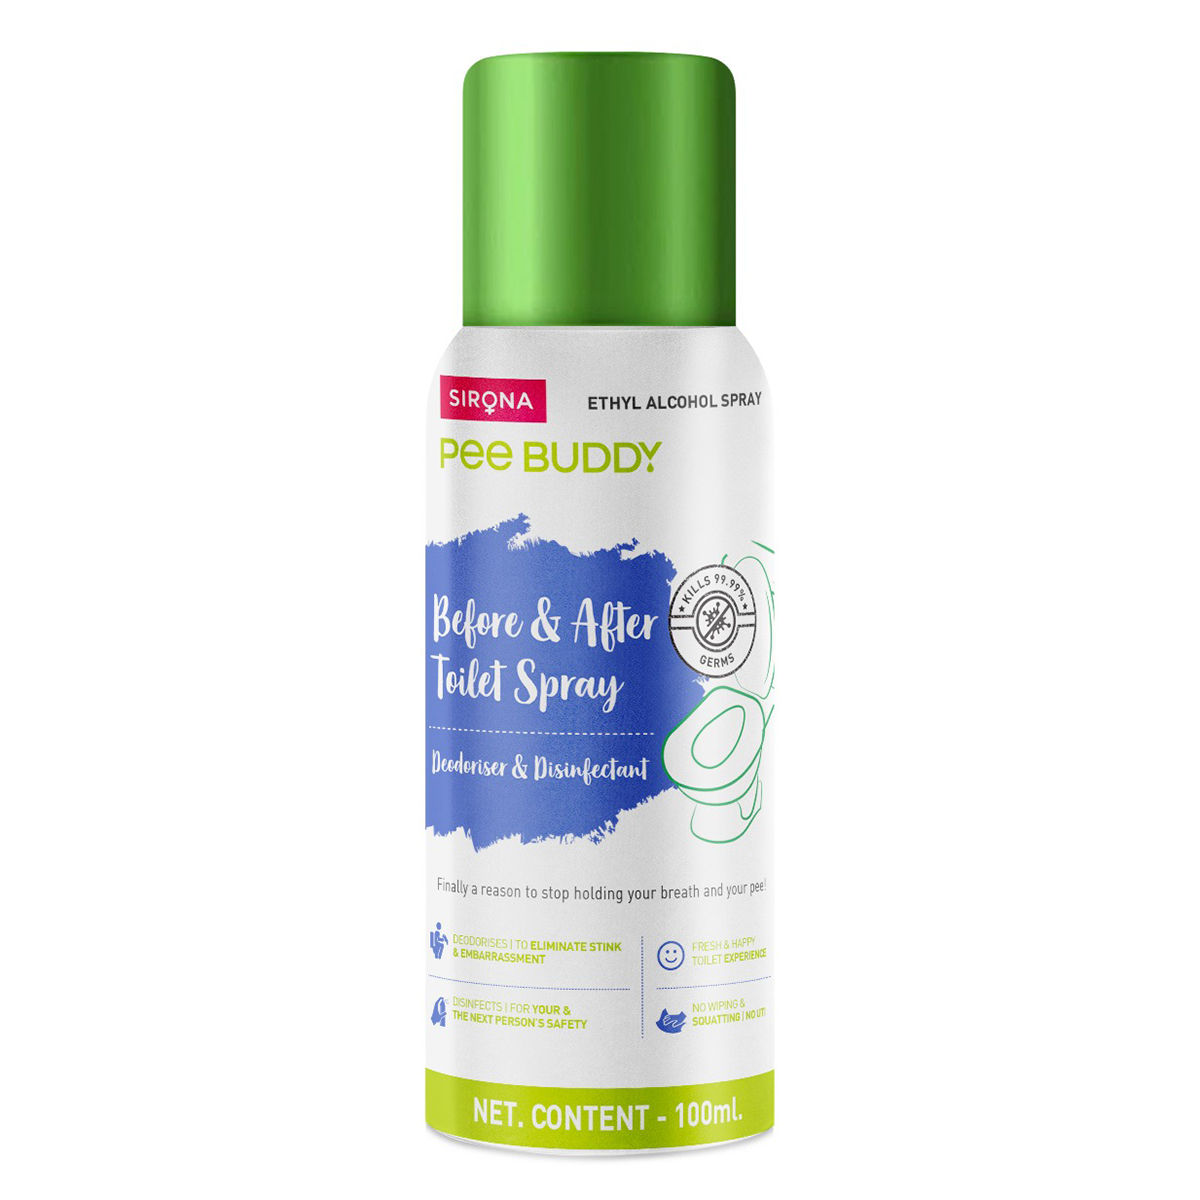 Buy Sirona Pee Buddy Deodoriser & Disinfectant Toilet Spray, 100 ml Online